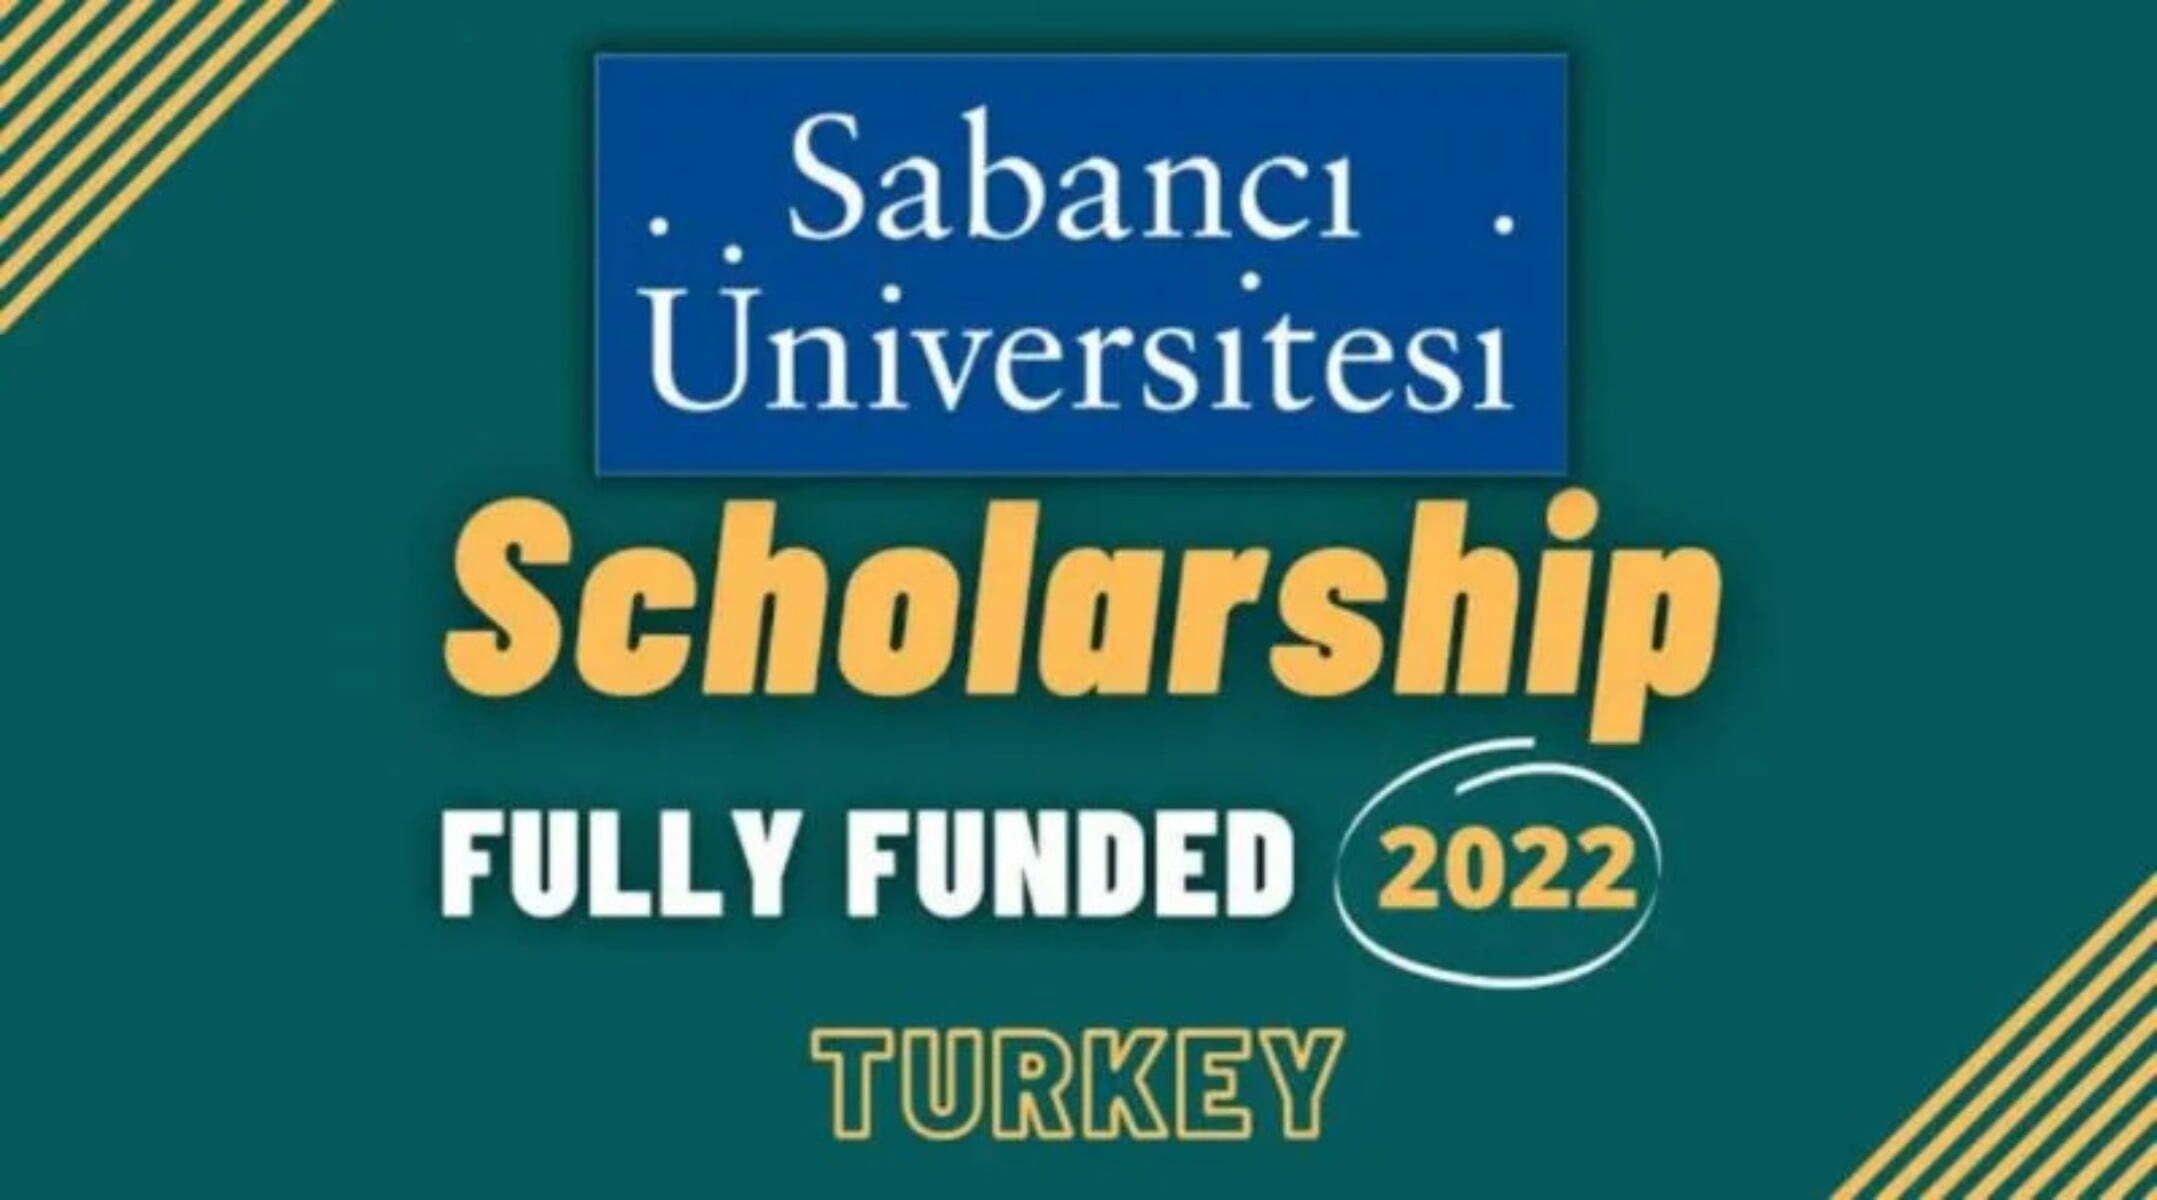 Sabanci Universitesi Graduate Scholarships 2022